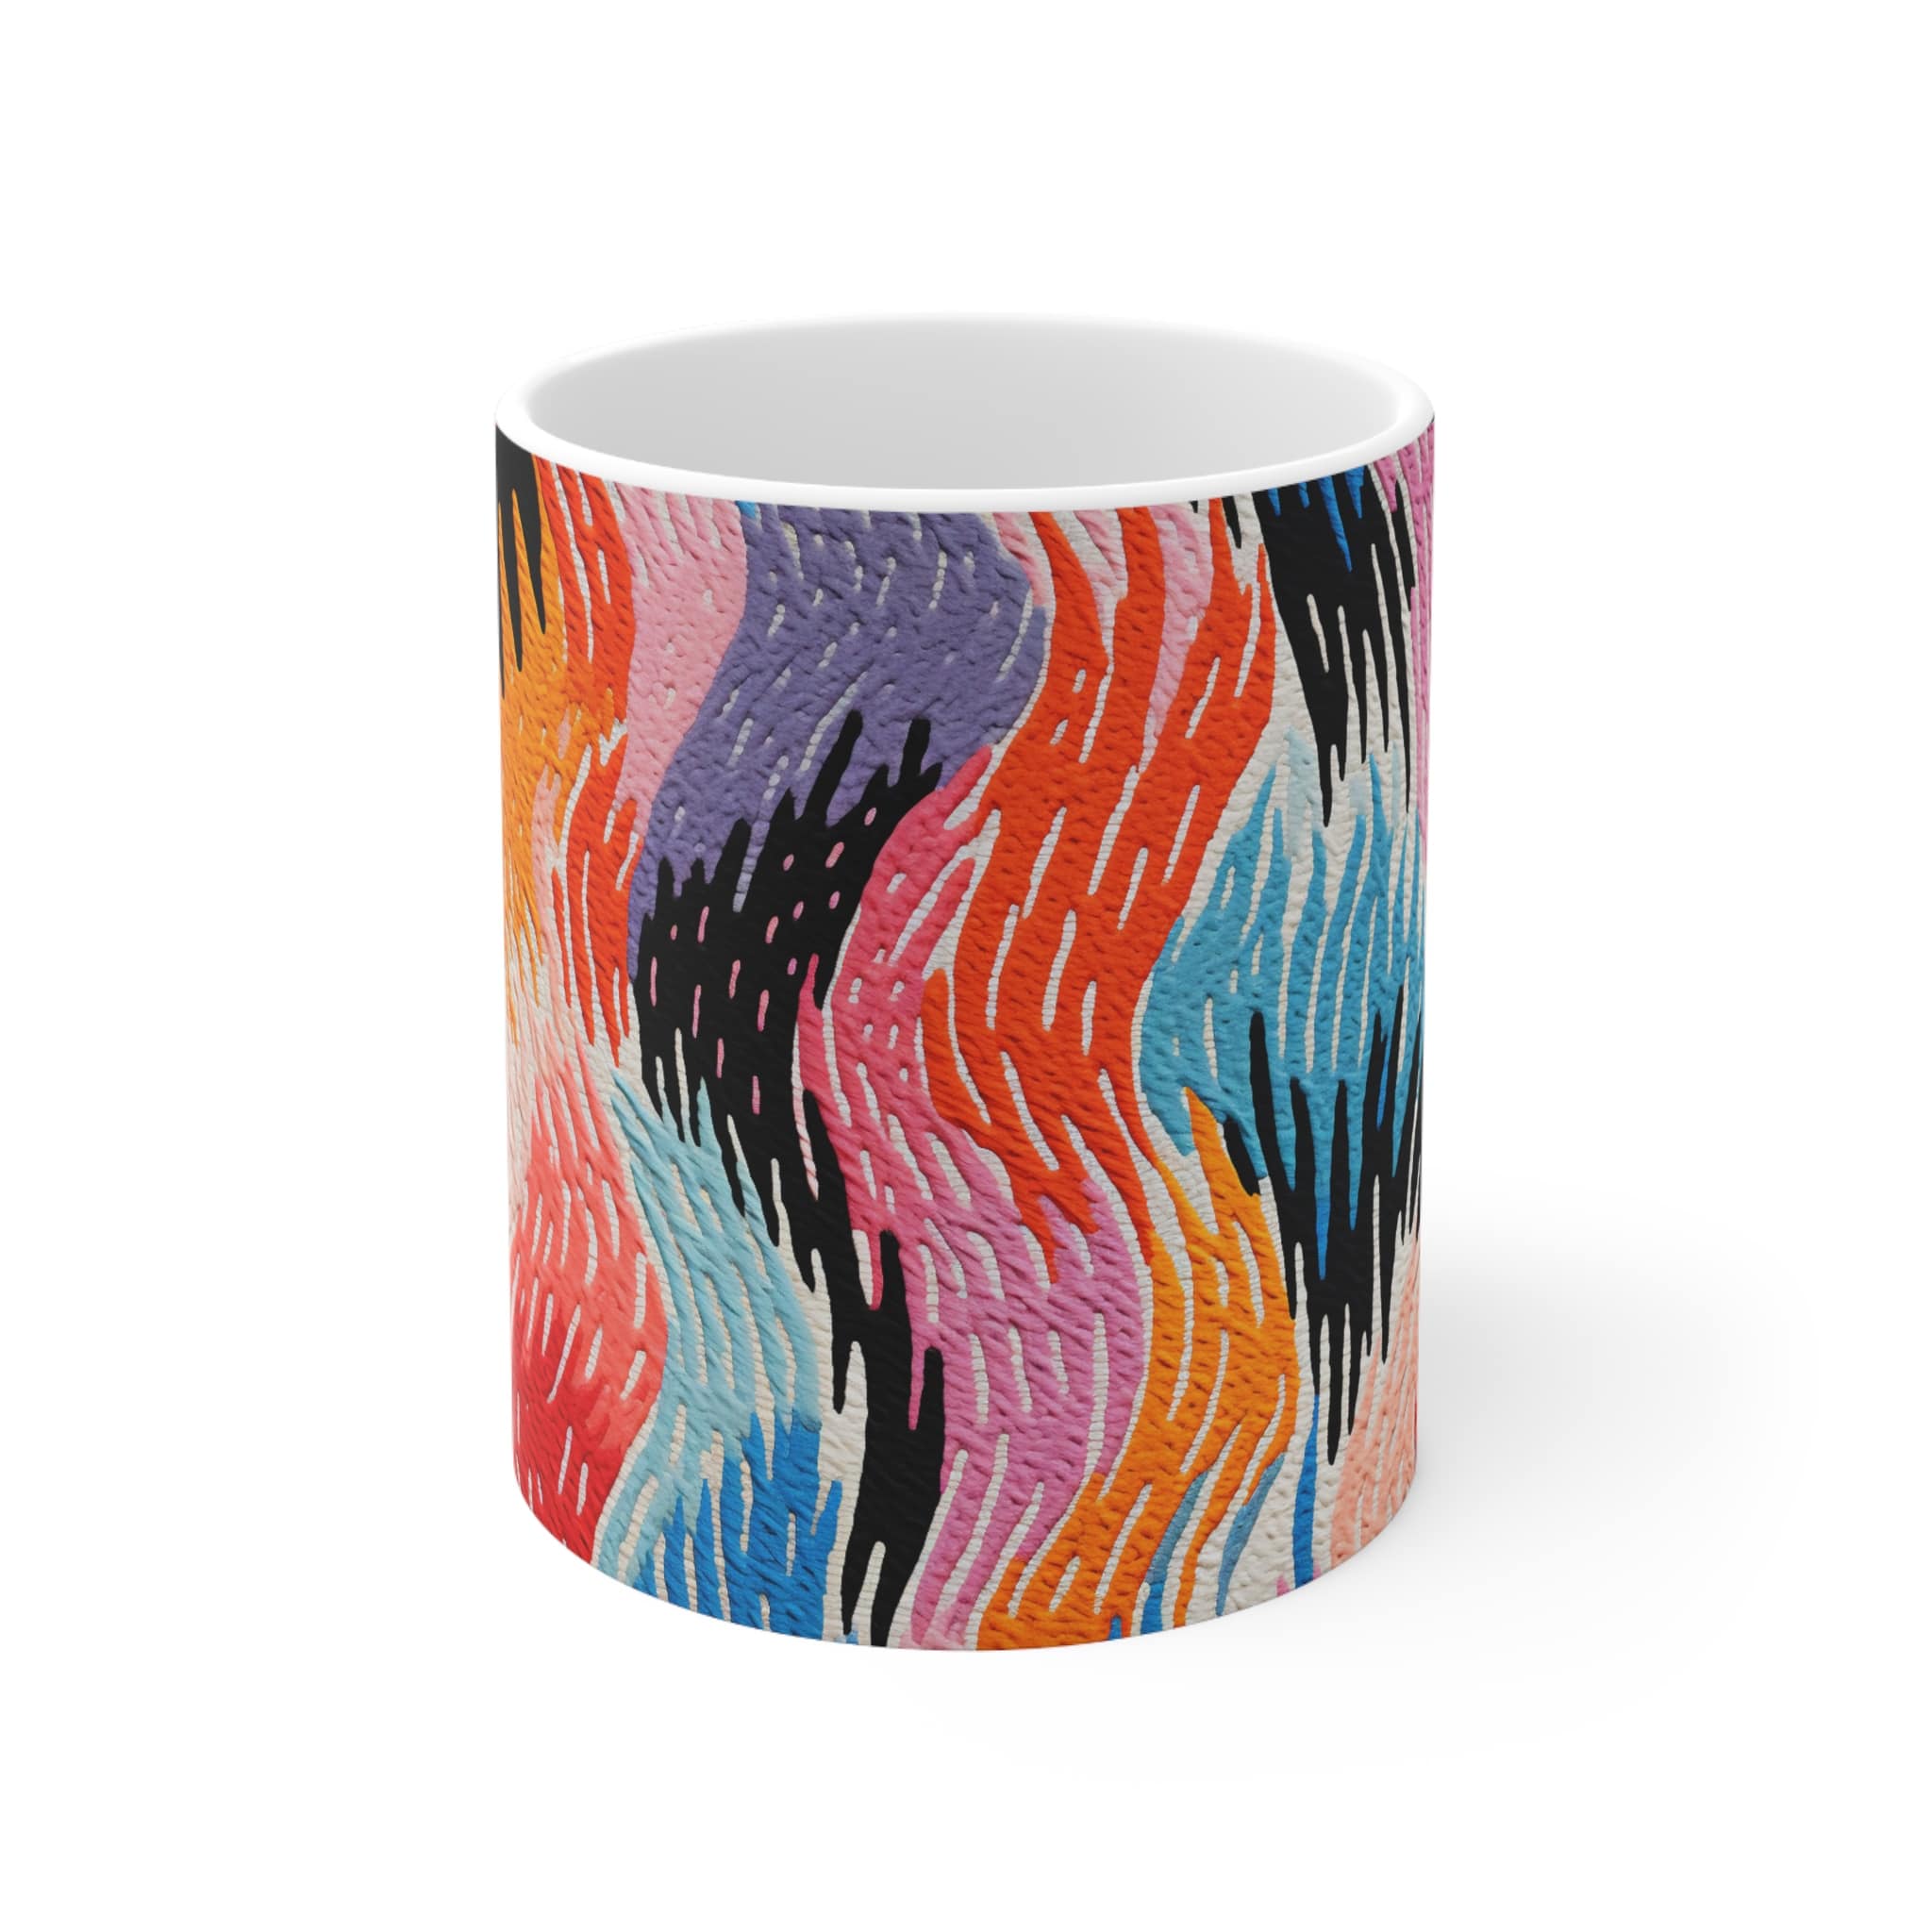 Symmetrical Stitched Patterns Ceramic Mug